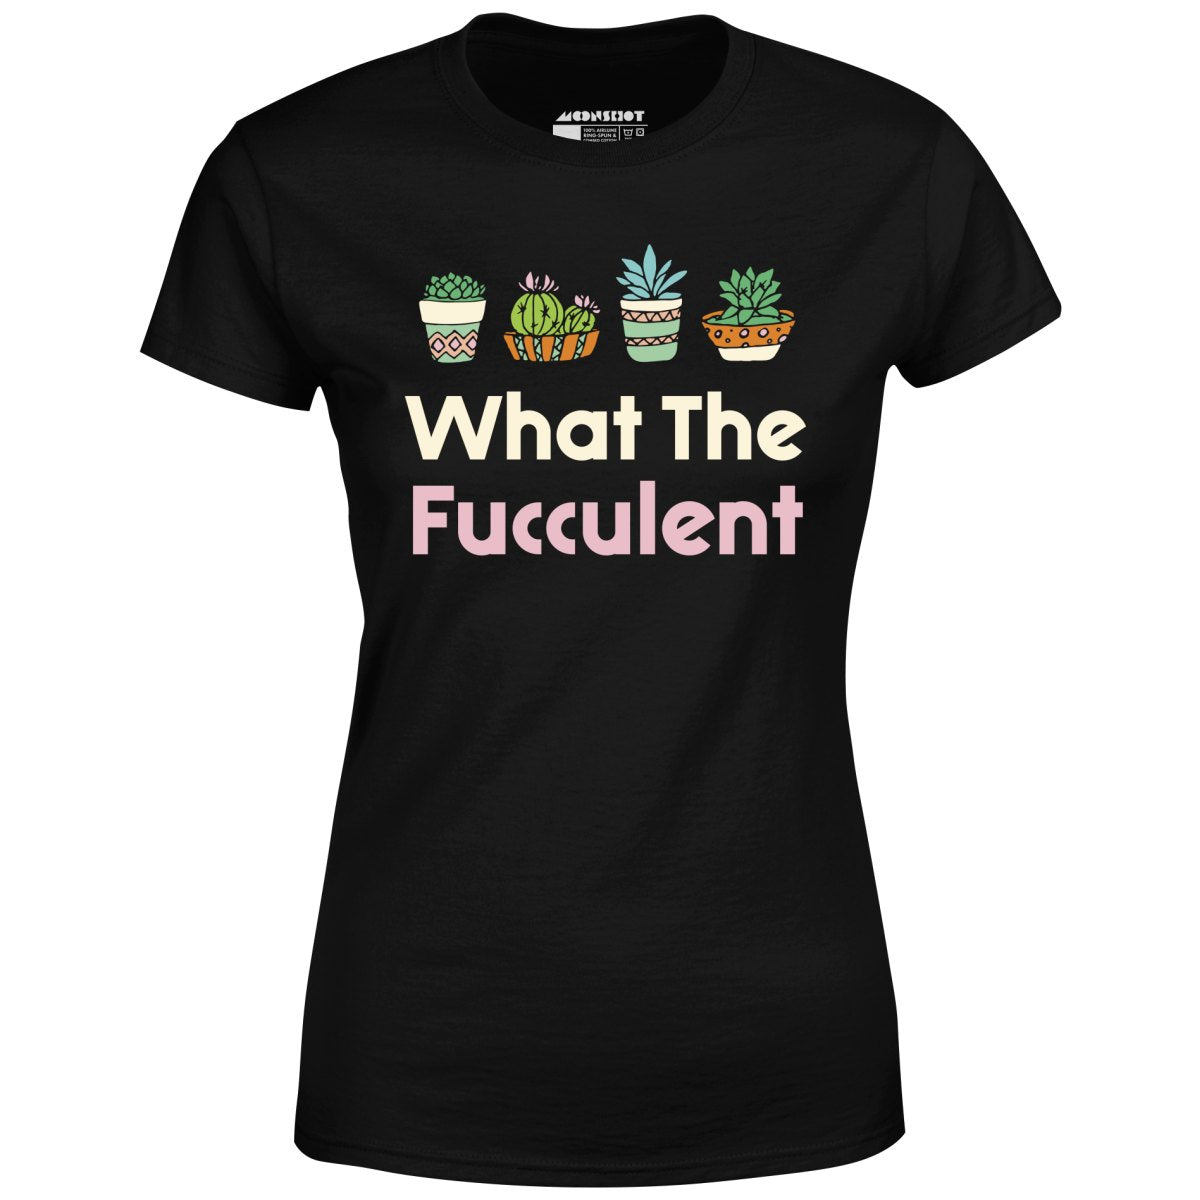 What The Fucculent - Women's T-Shirt